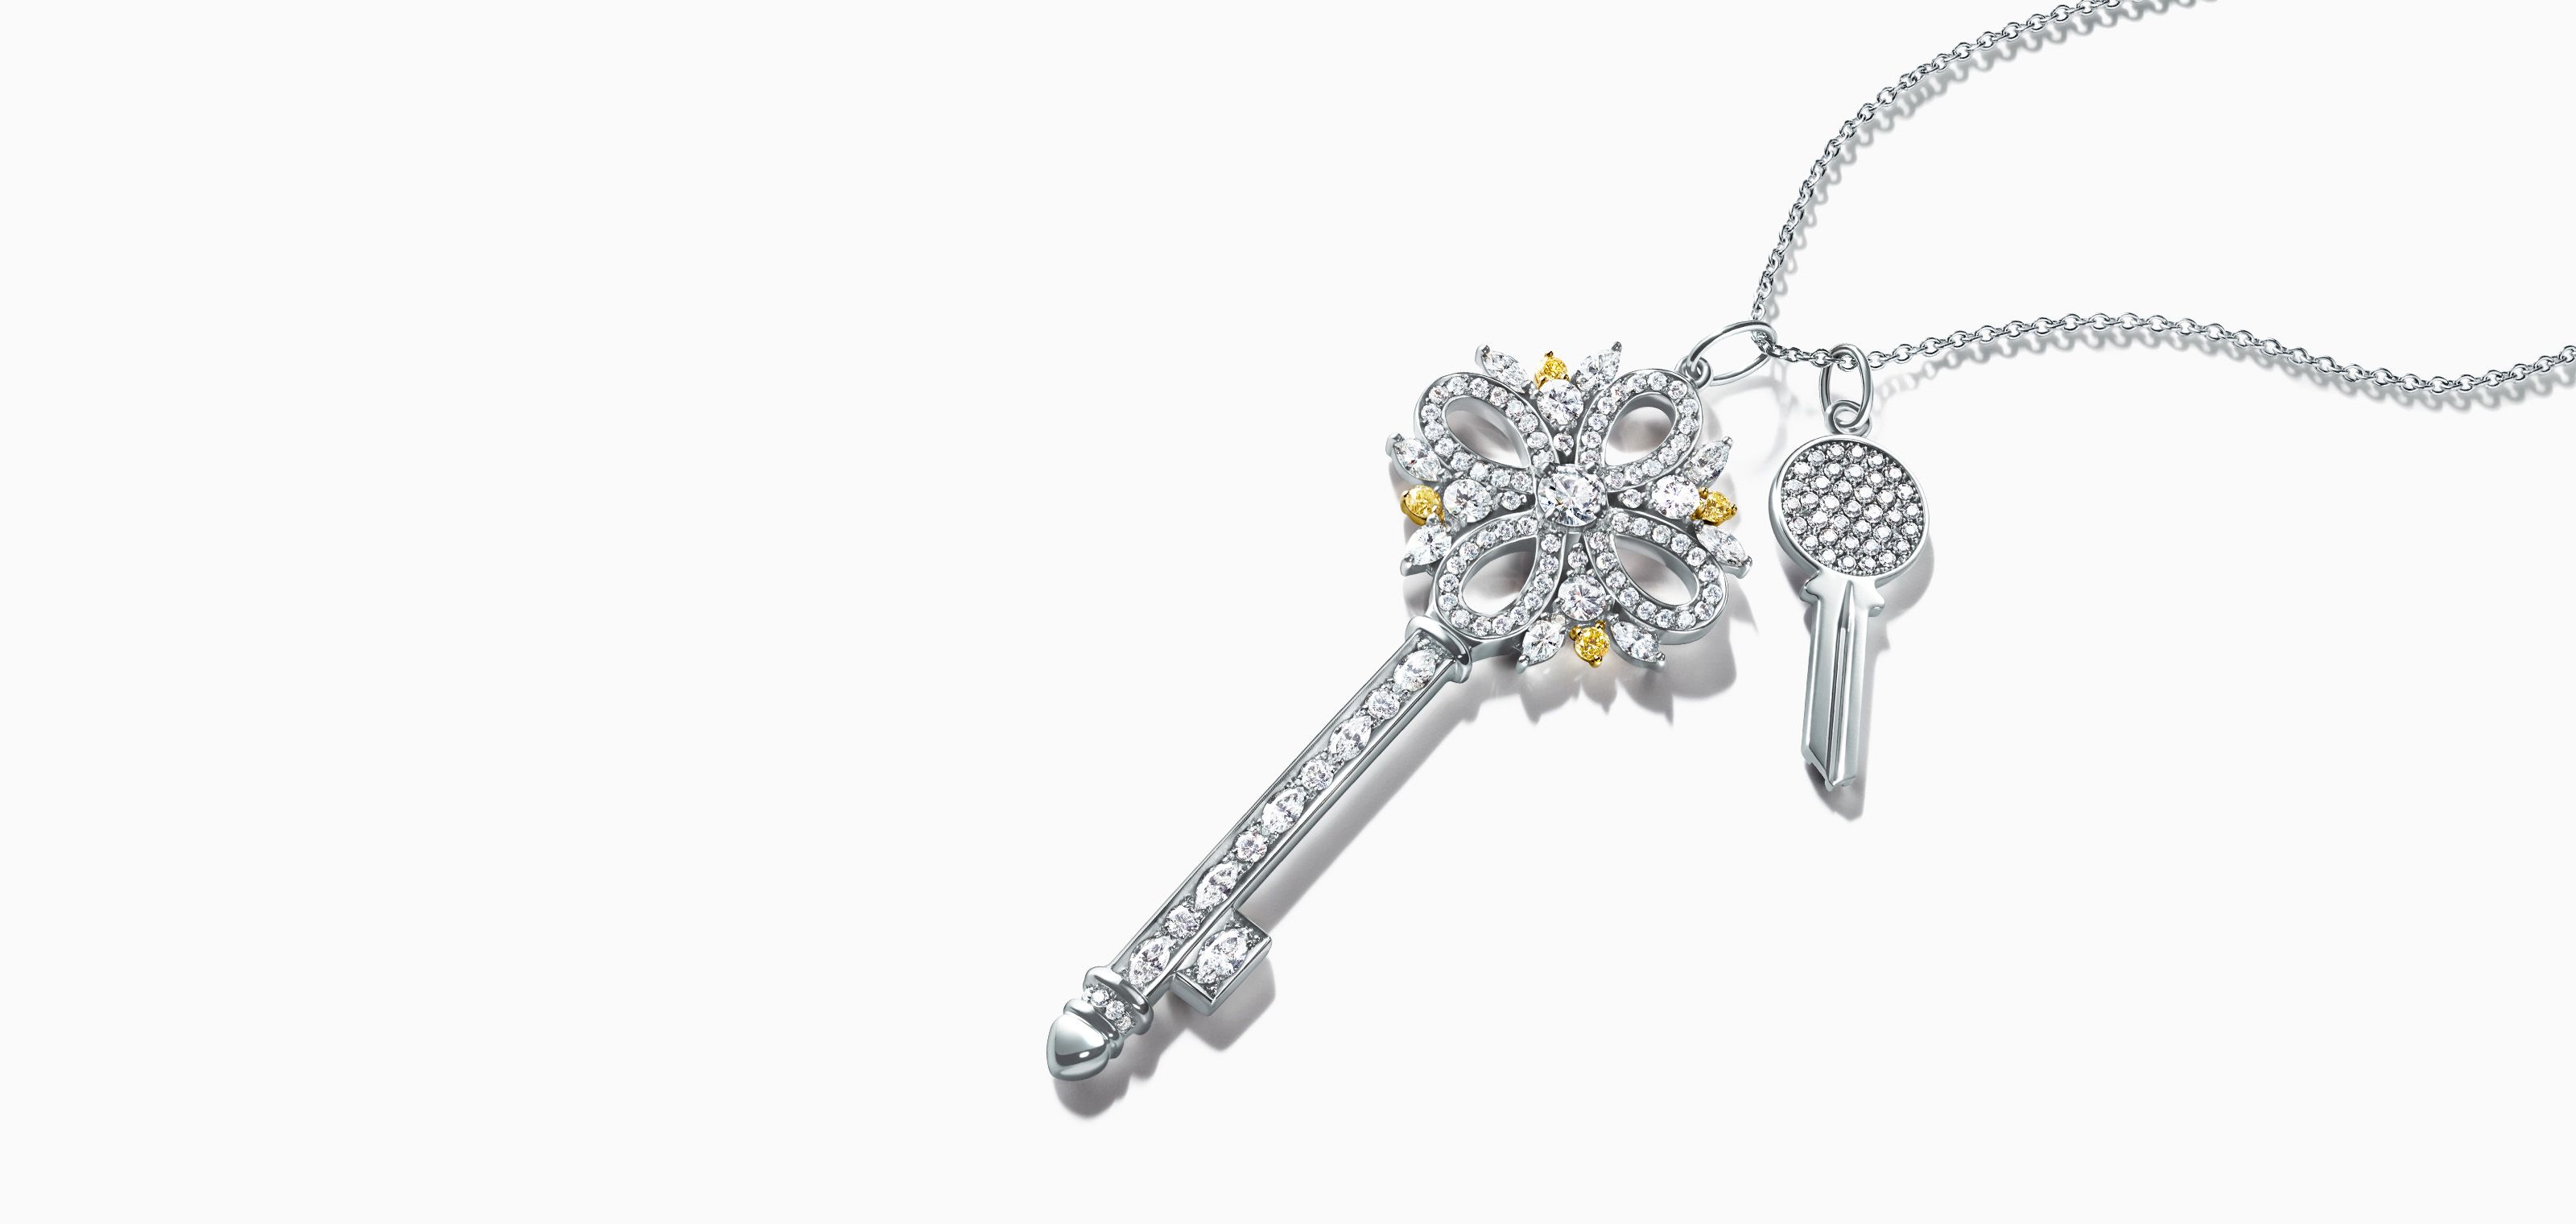 Tiffany & Co. Crown Key Pendant Necklace